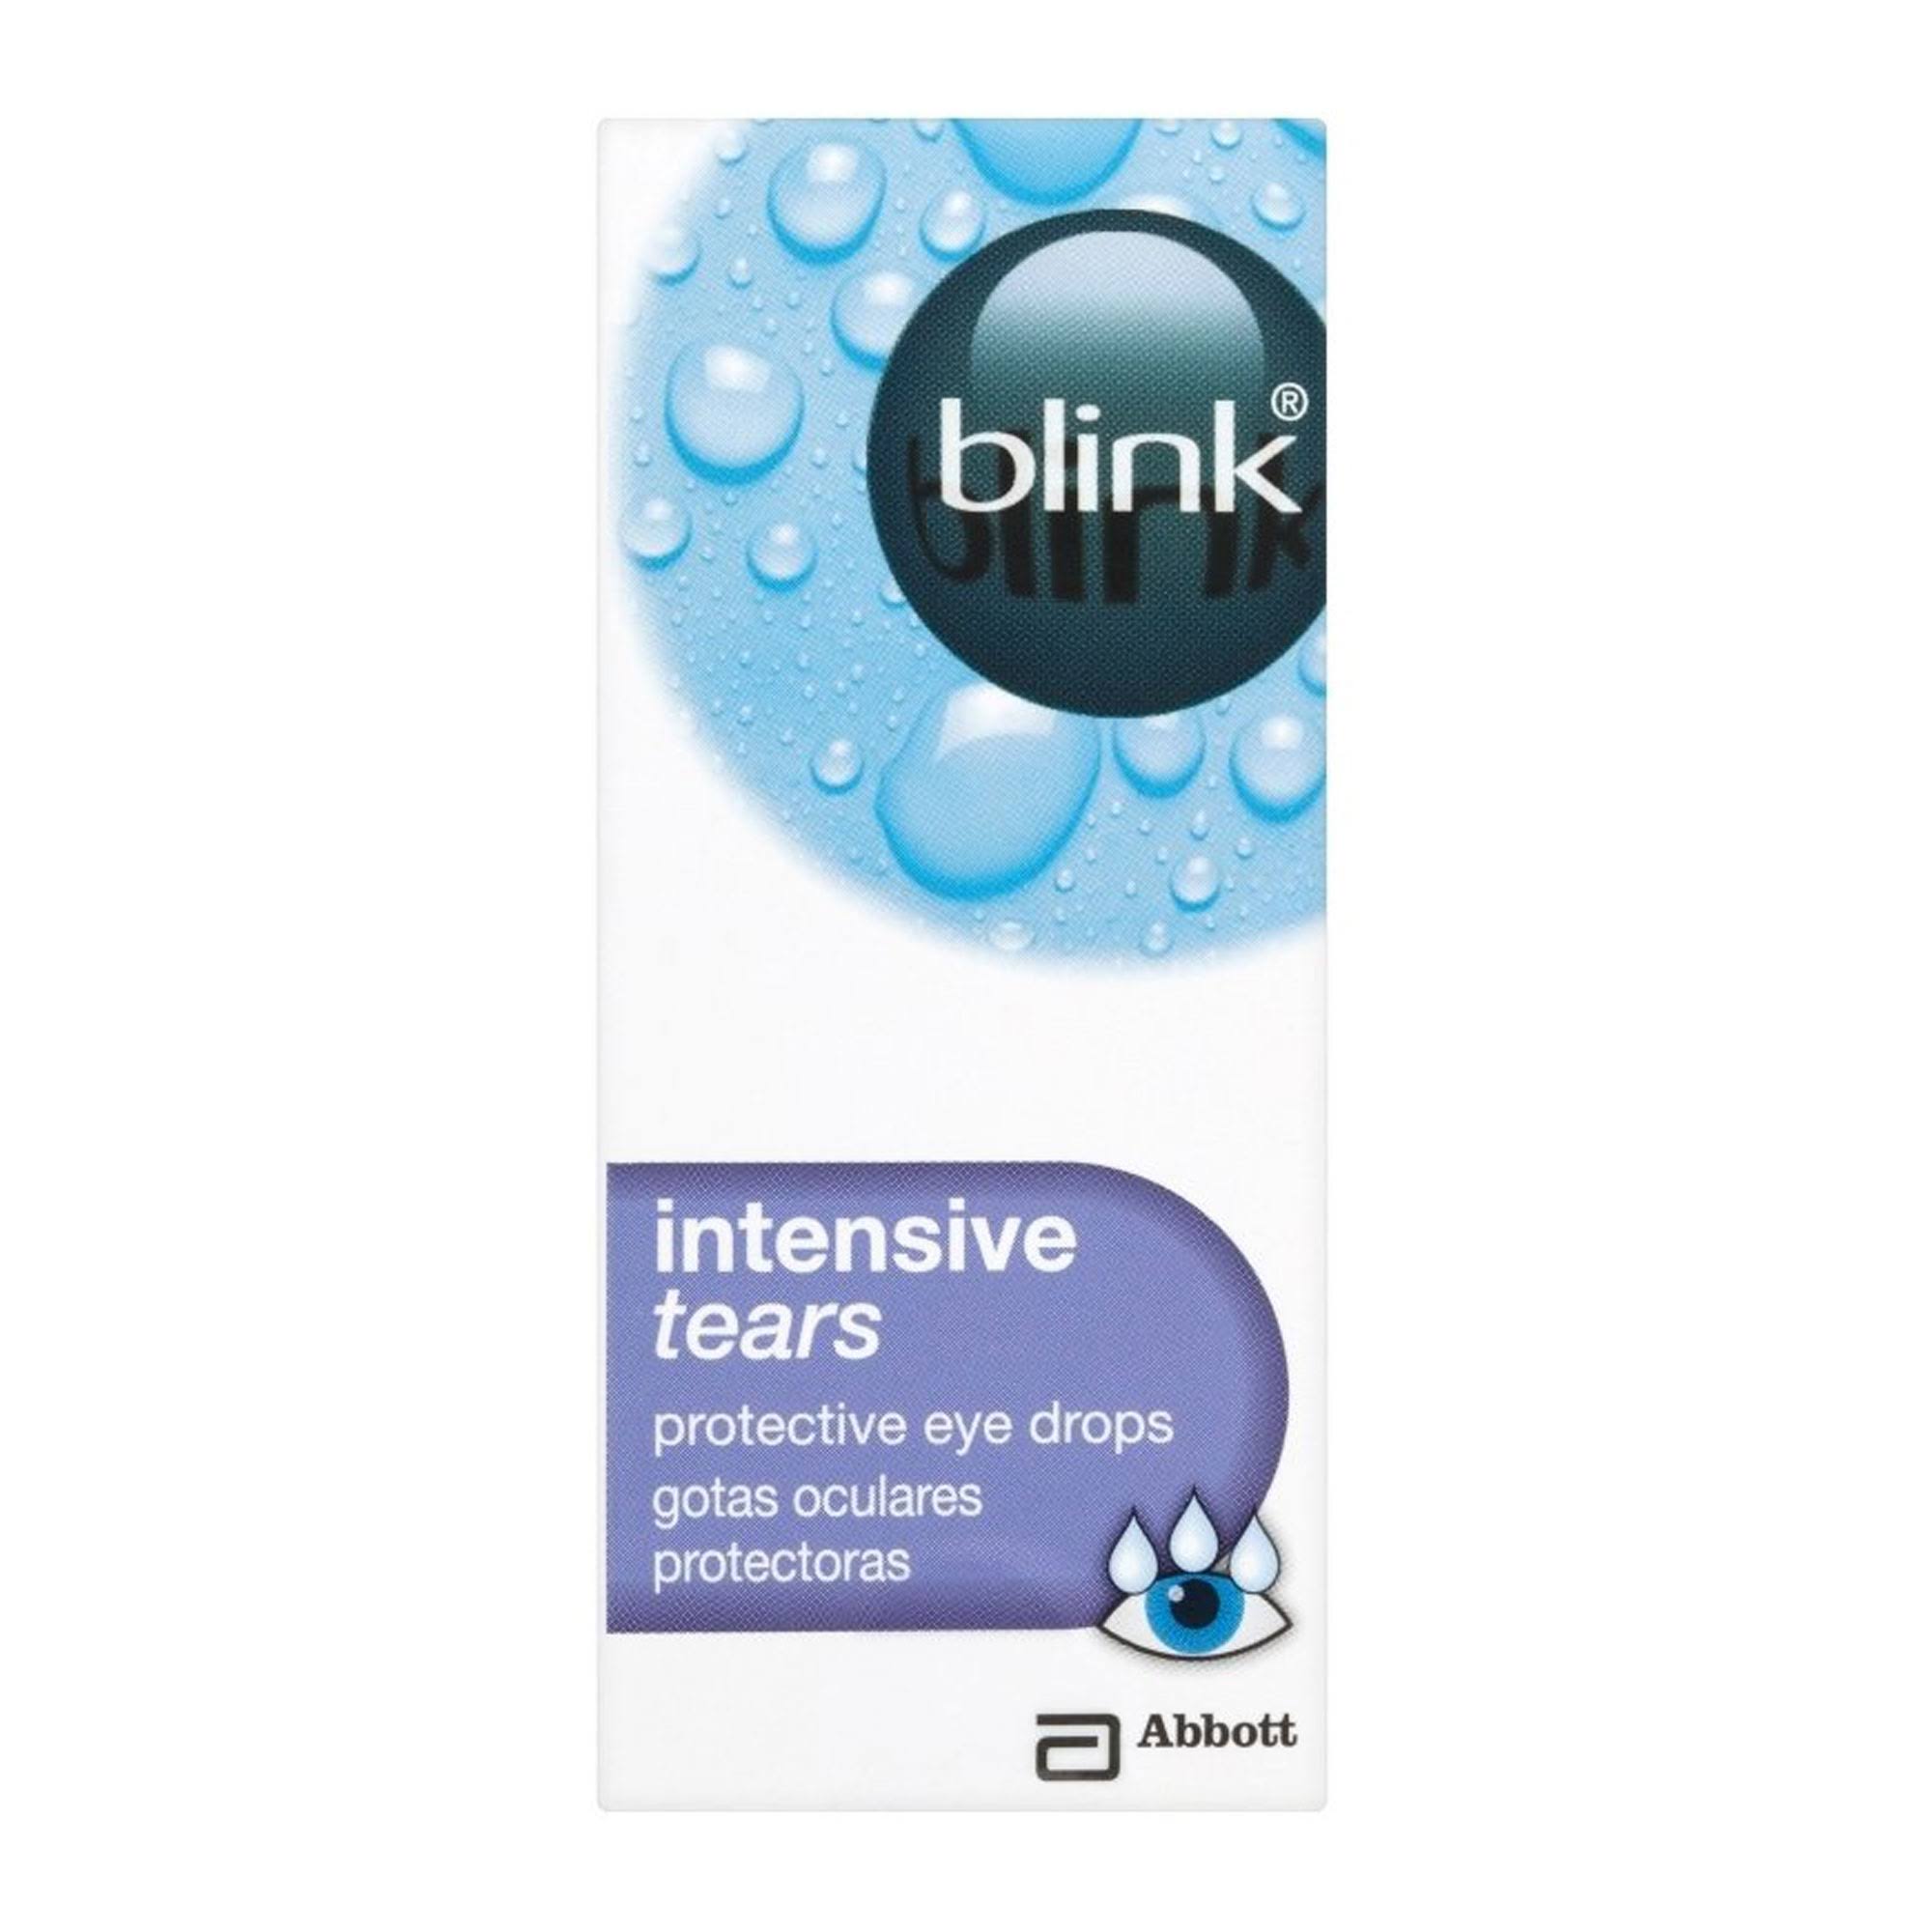 Blink Intensive Tears Protective Eye Drops - 10ml